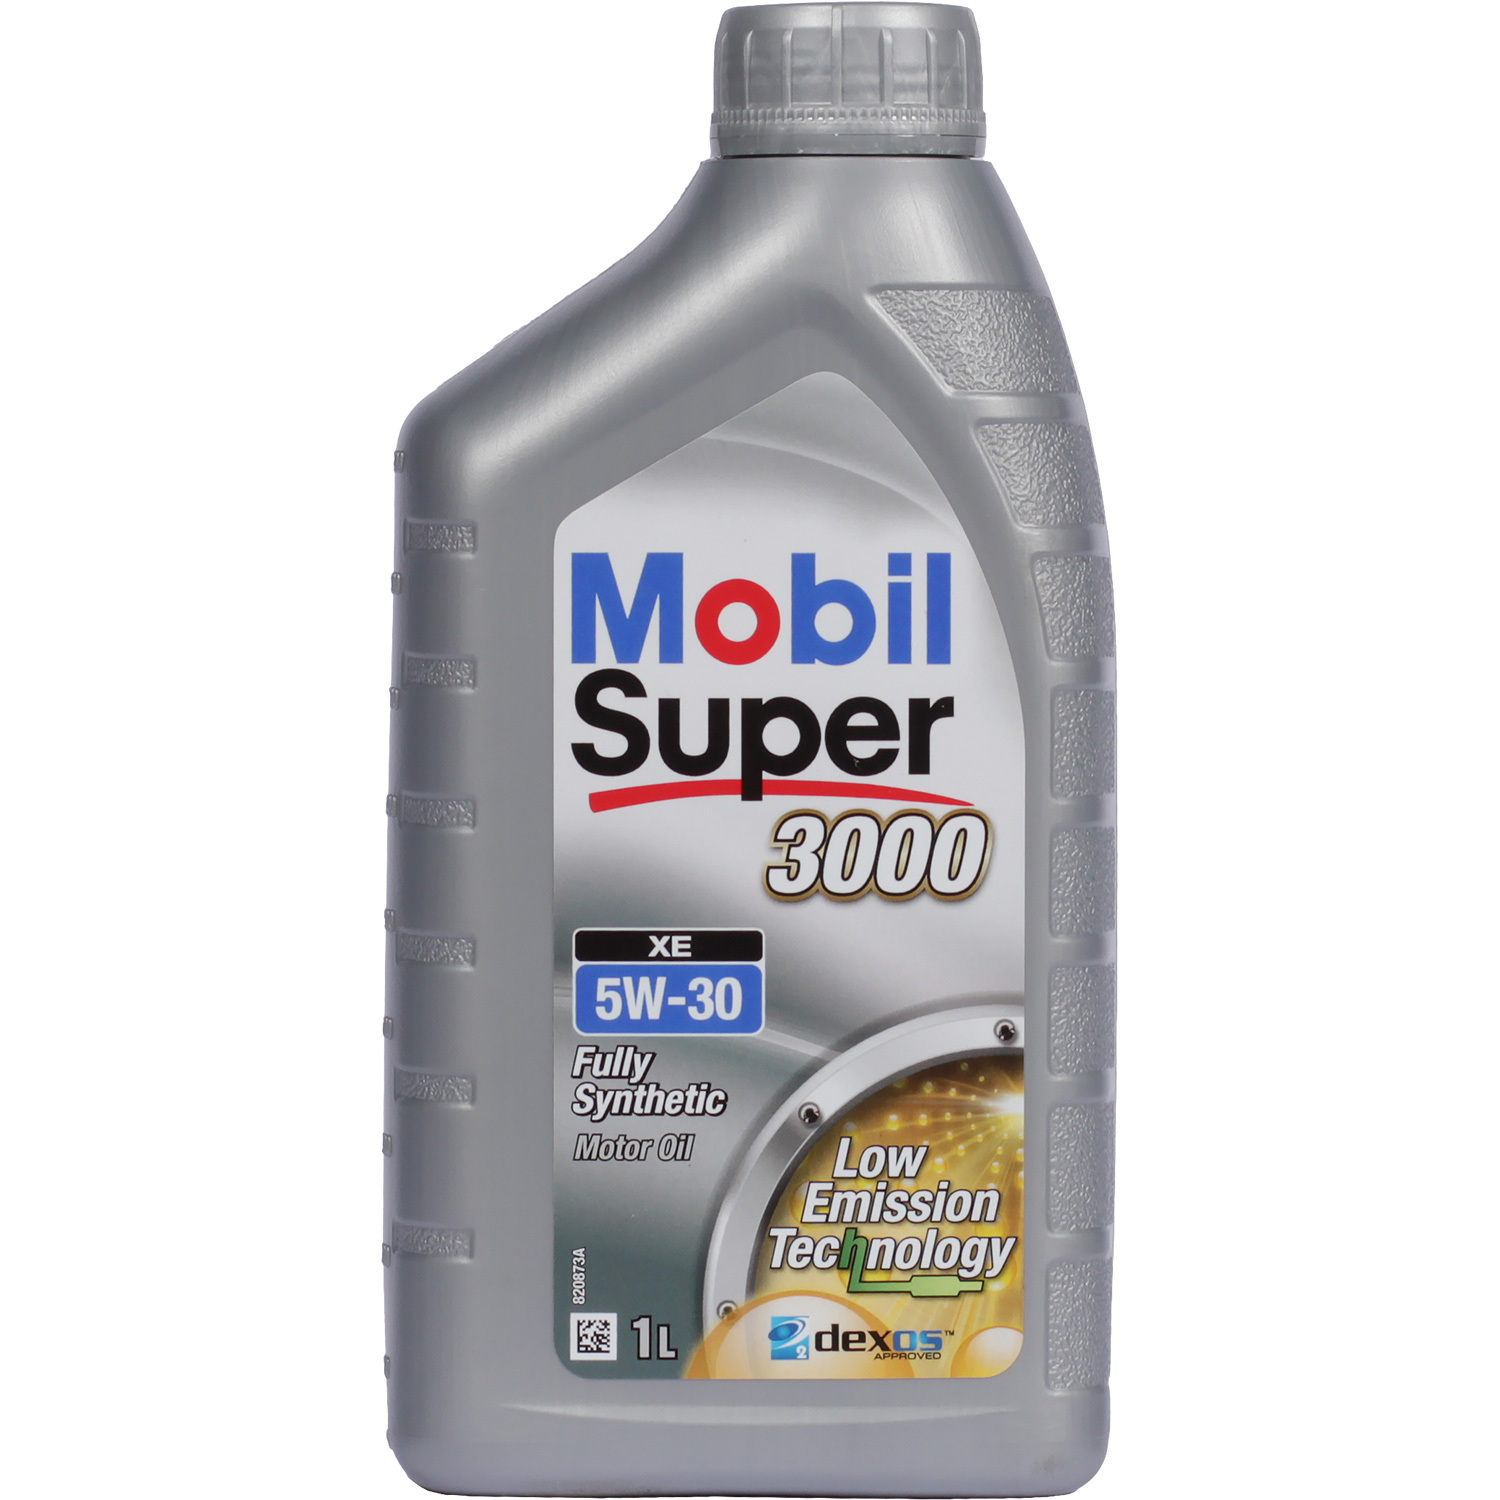 Mobil Моторное масло Mobil Super 3000 XE 5W-30, 1 л масло моторное mobil 1 esp formula 5w 30 1 л